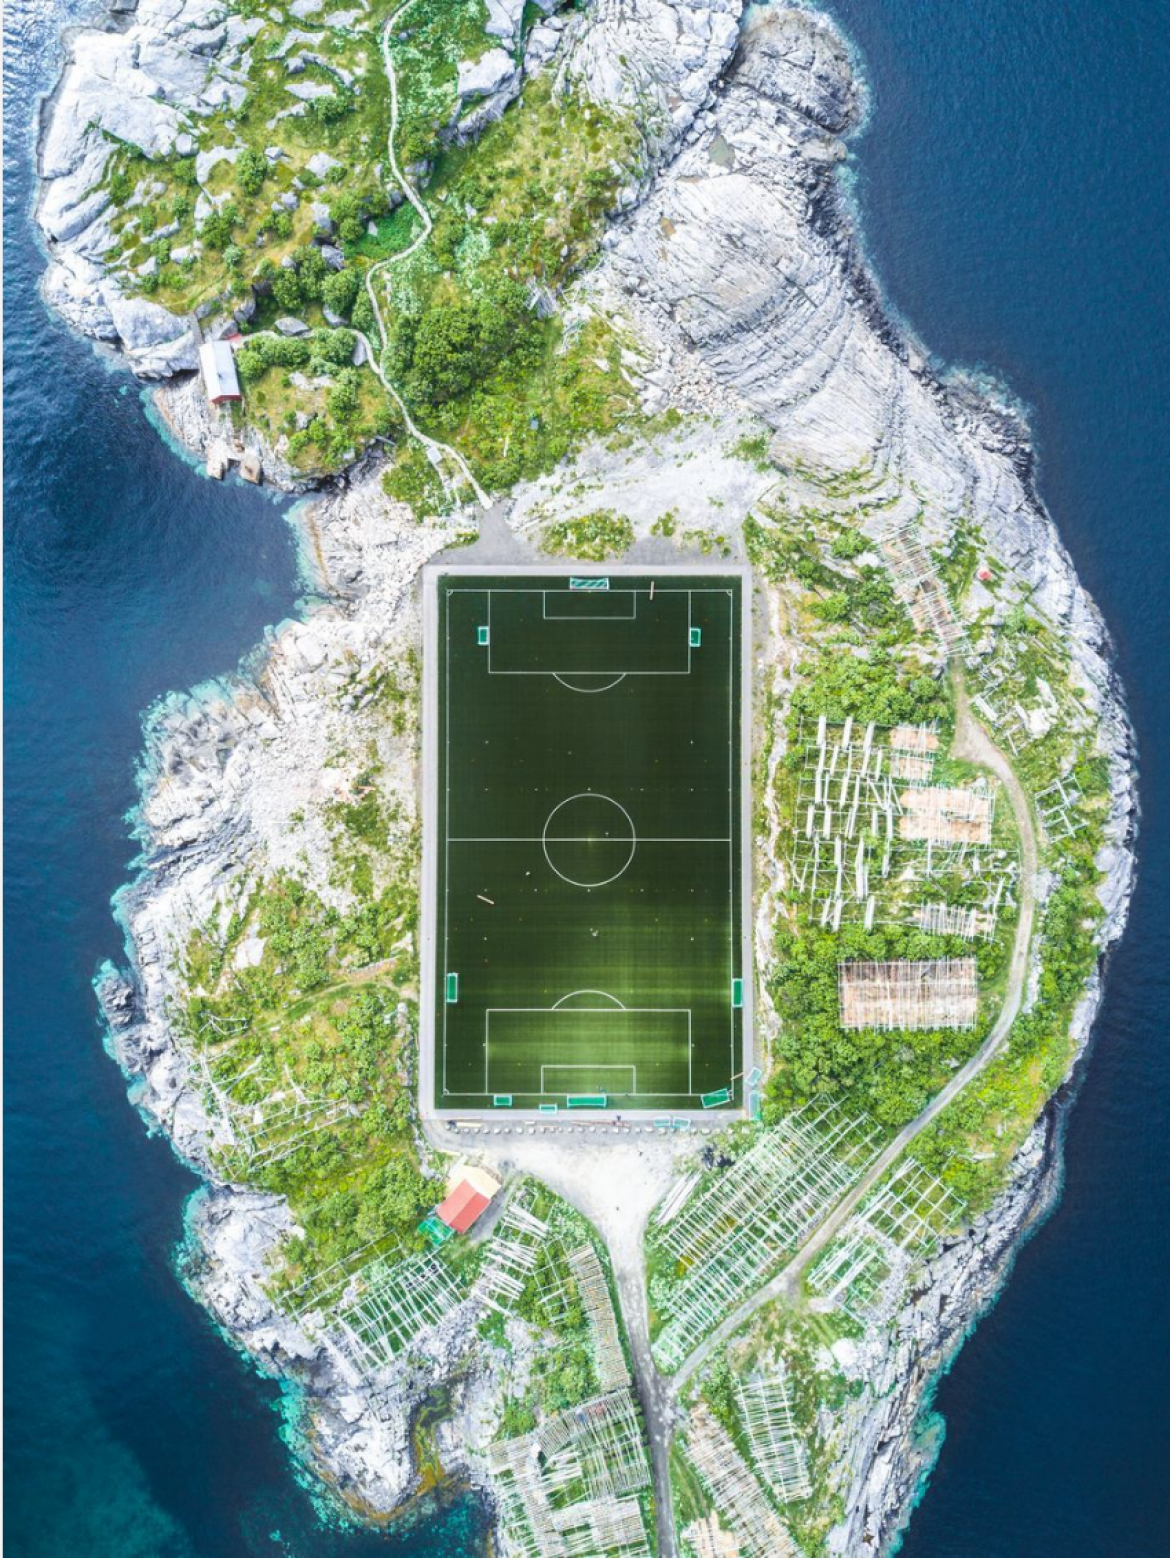 fot. Misha De-Stroyev, "Henningsvær Football Field", 3. miejsce w kategorii Miasta